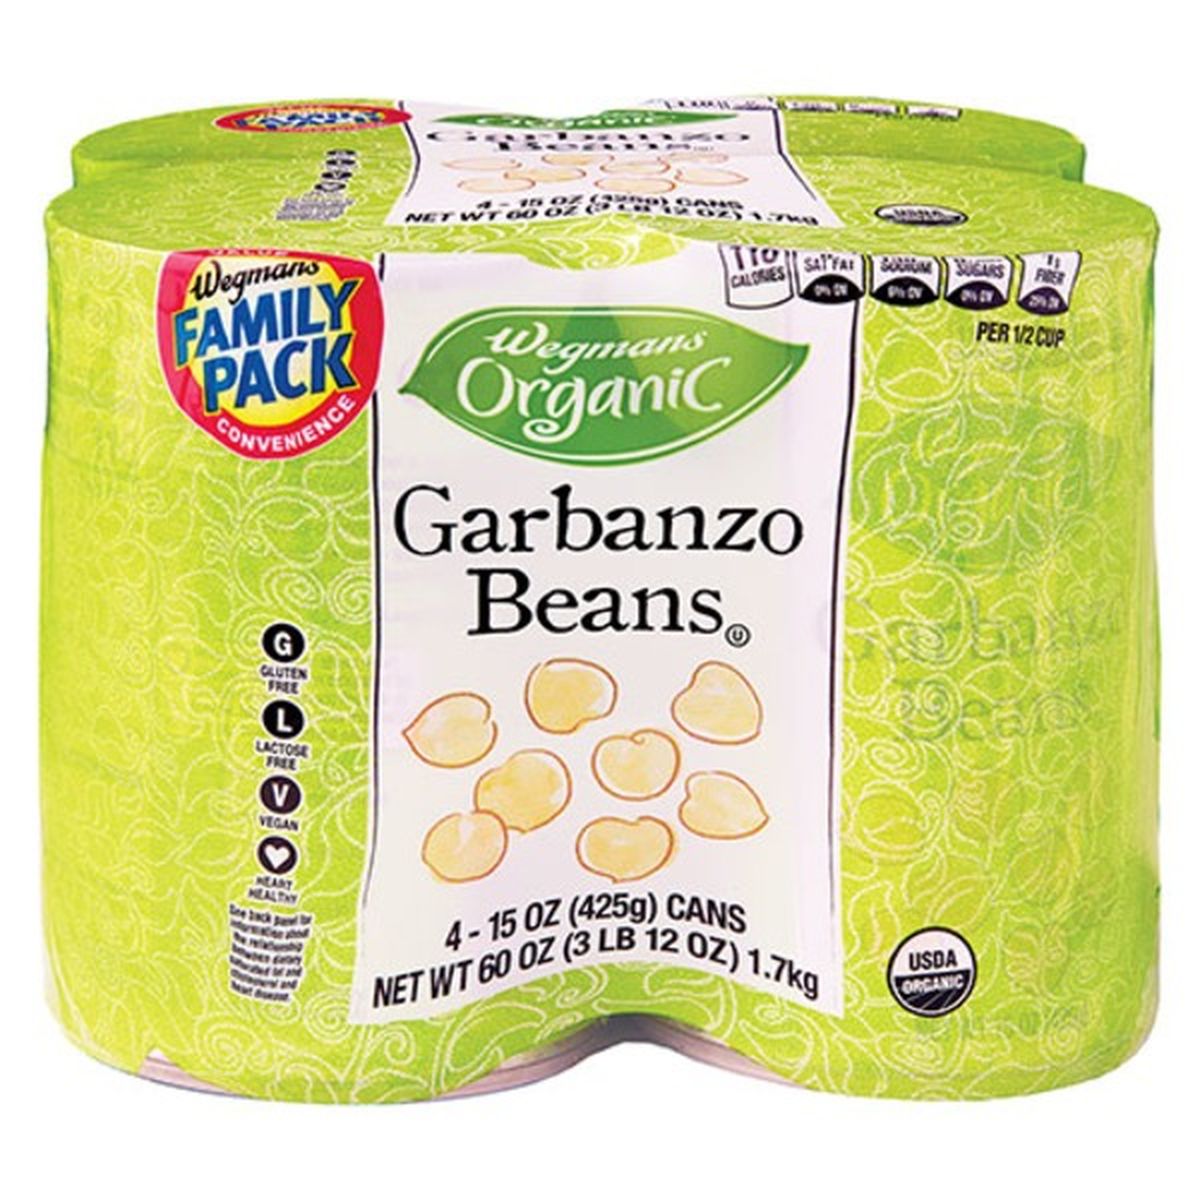 Calories in Wegmans Organic Garbanzo Beans, FAMILY PACK